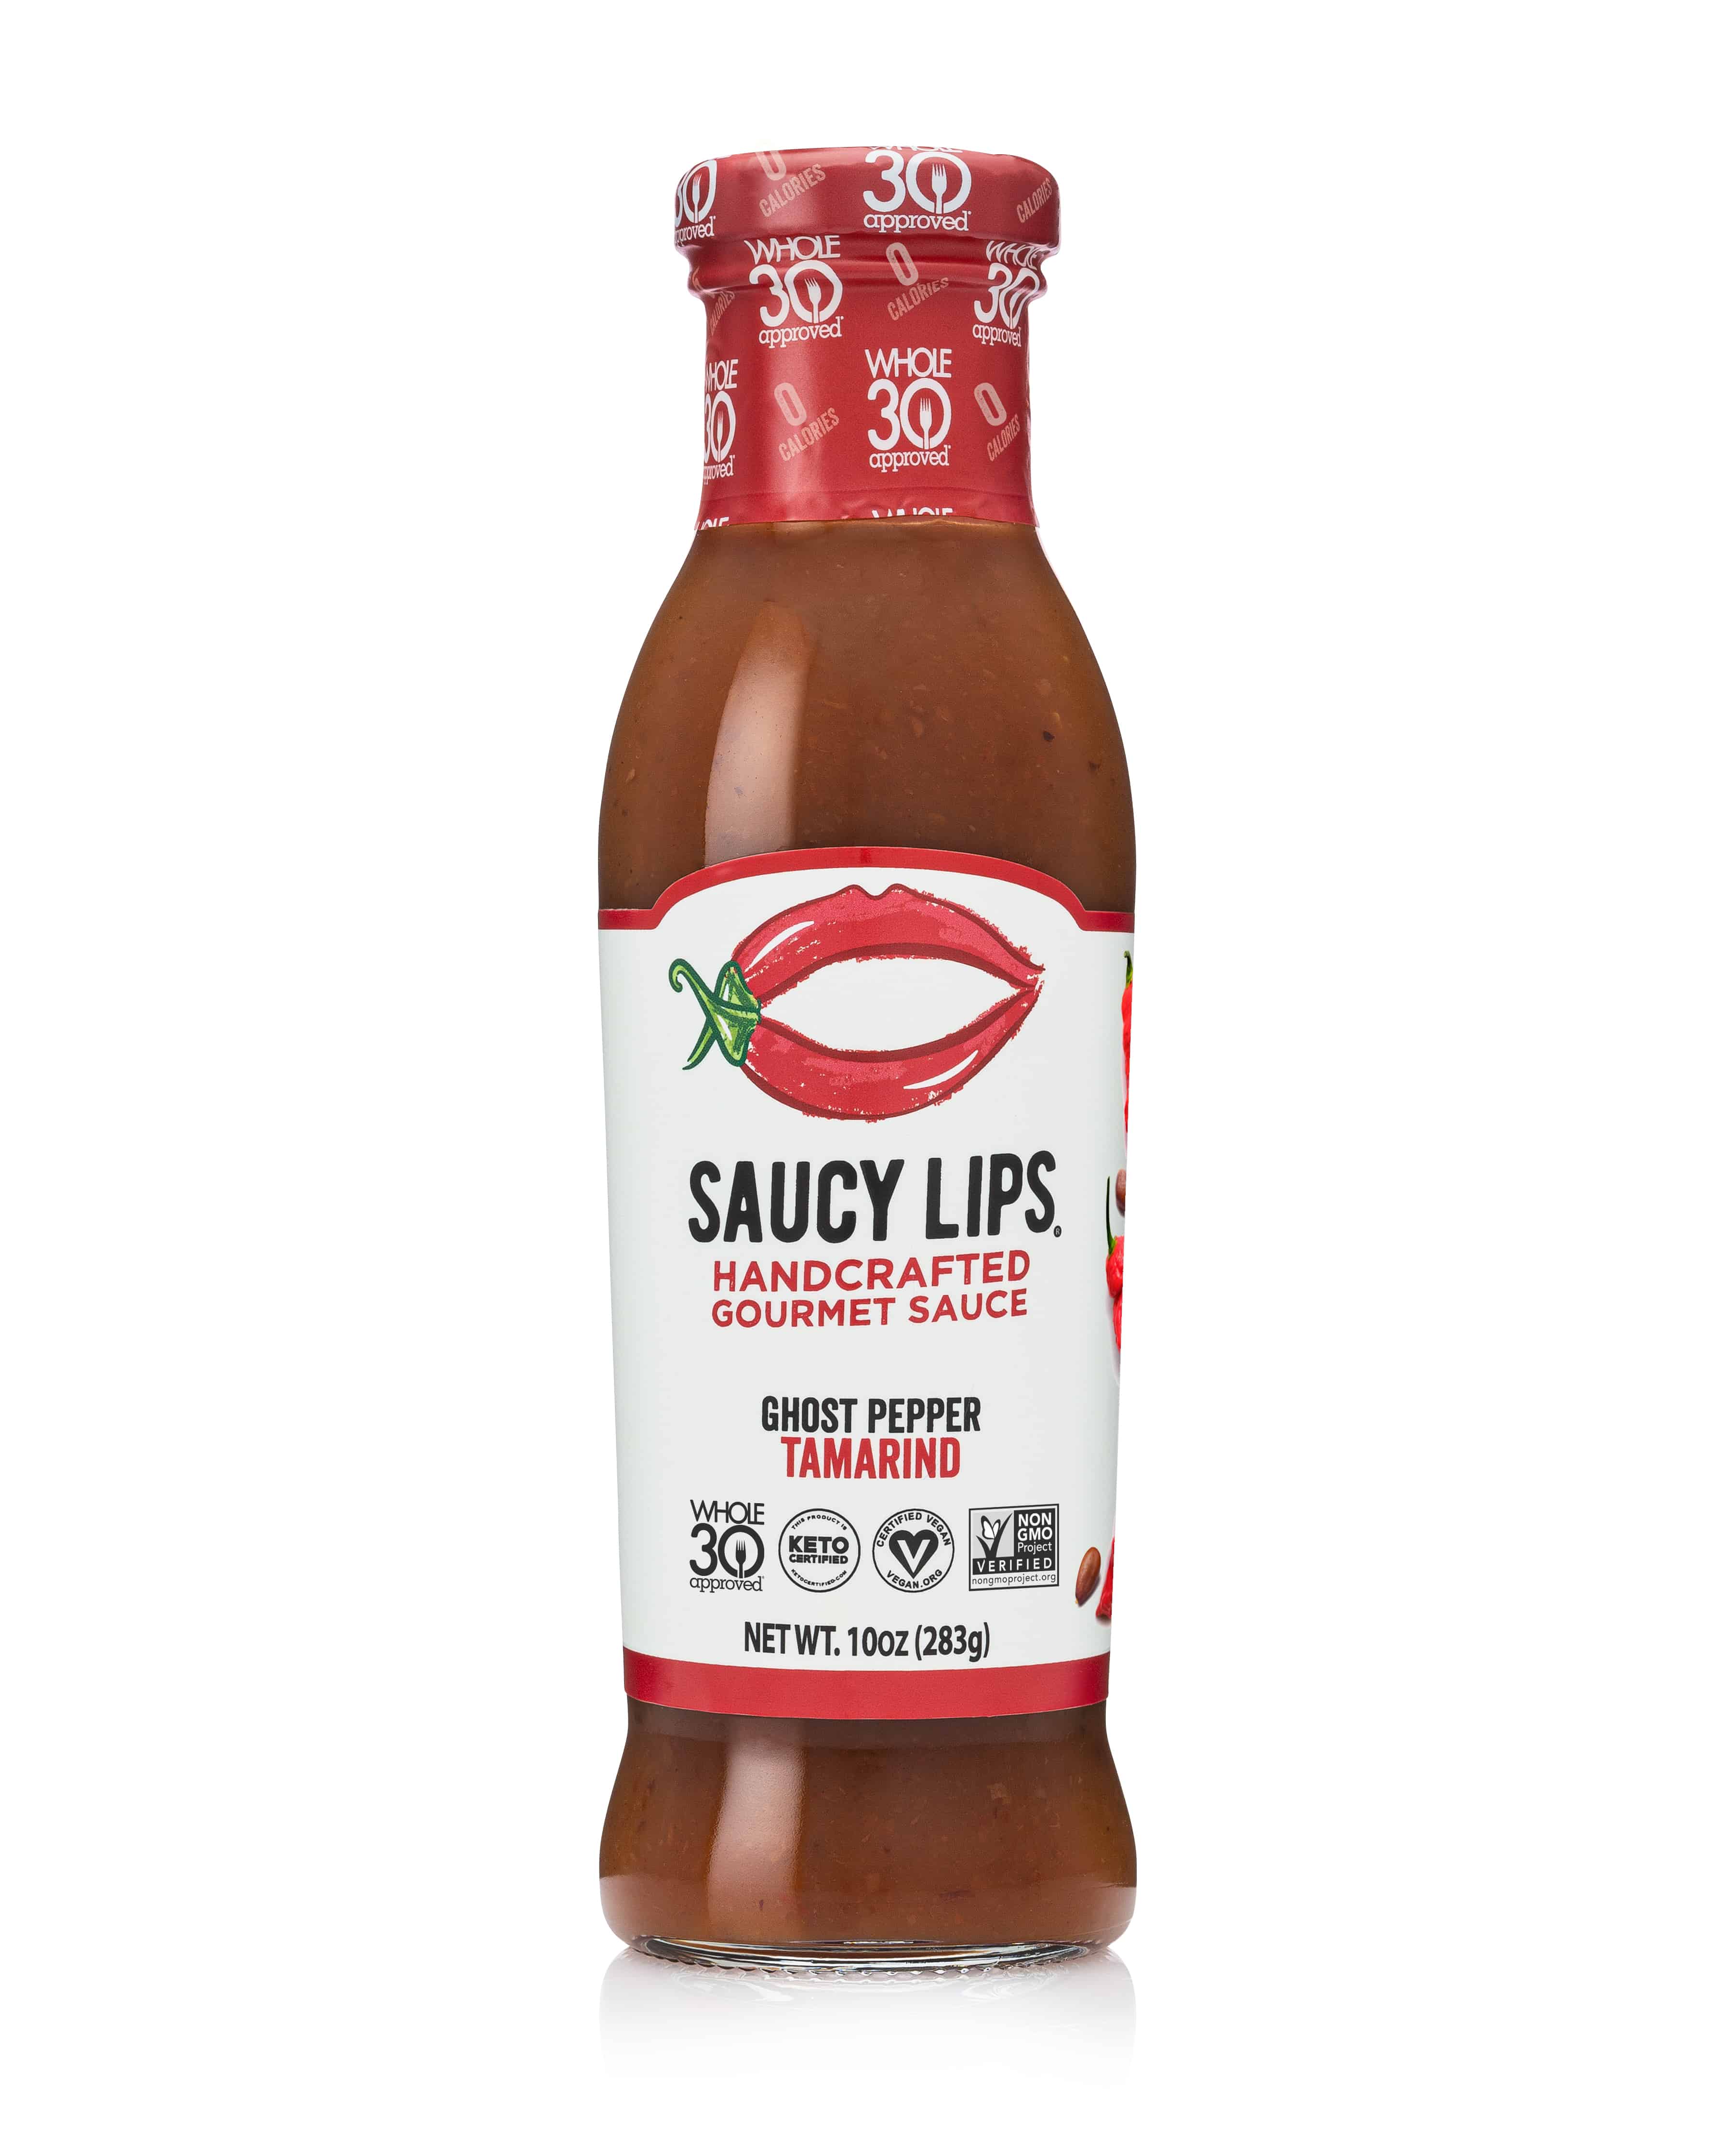 Saucy Lips Ghost Pepper & Tamarind Gourmet Sauce 6 units per case